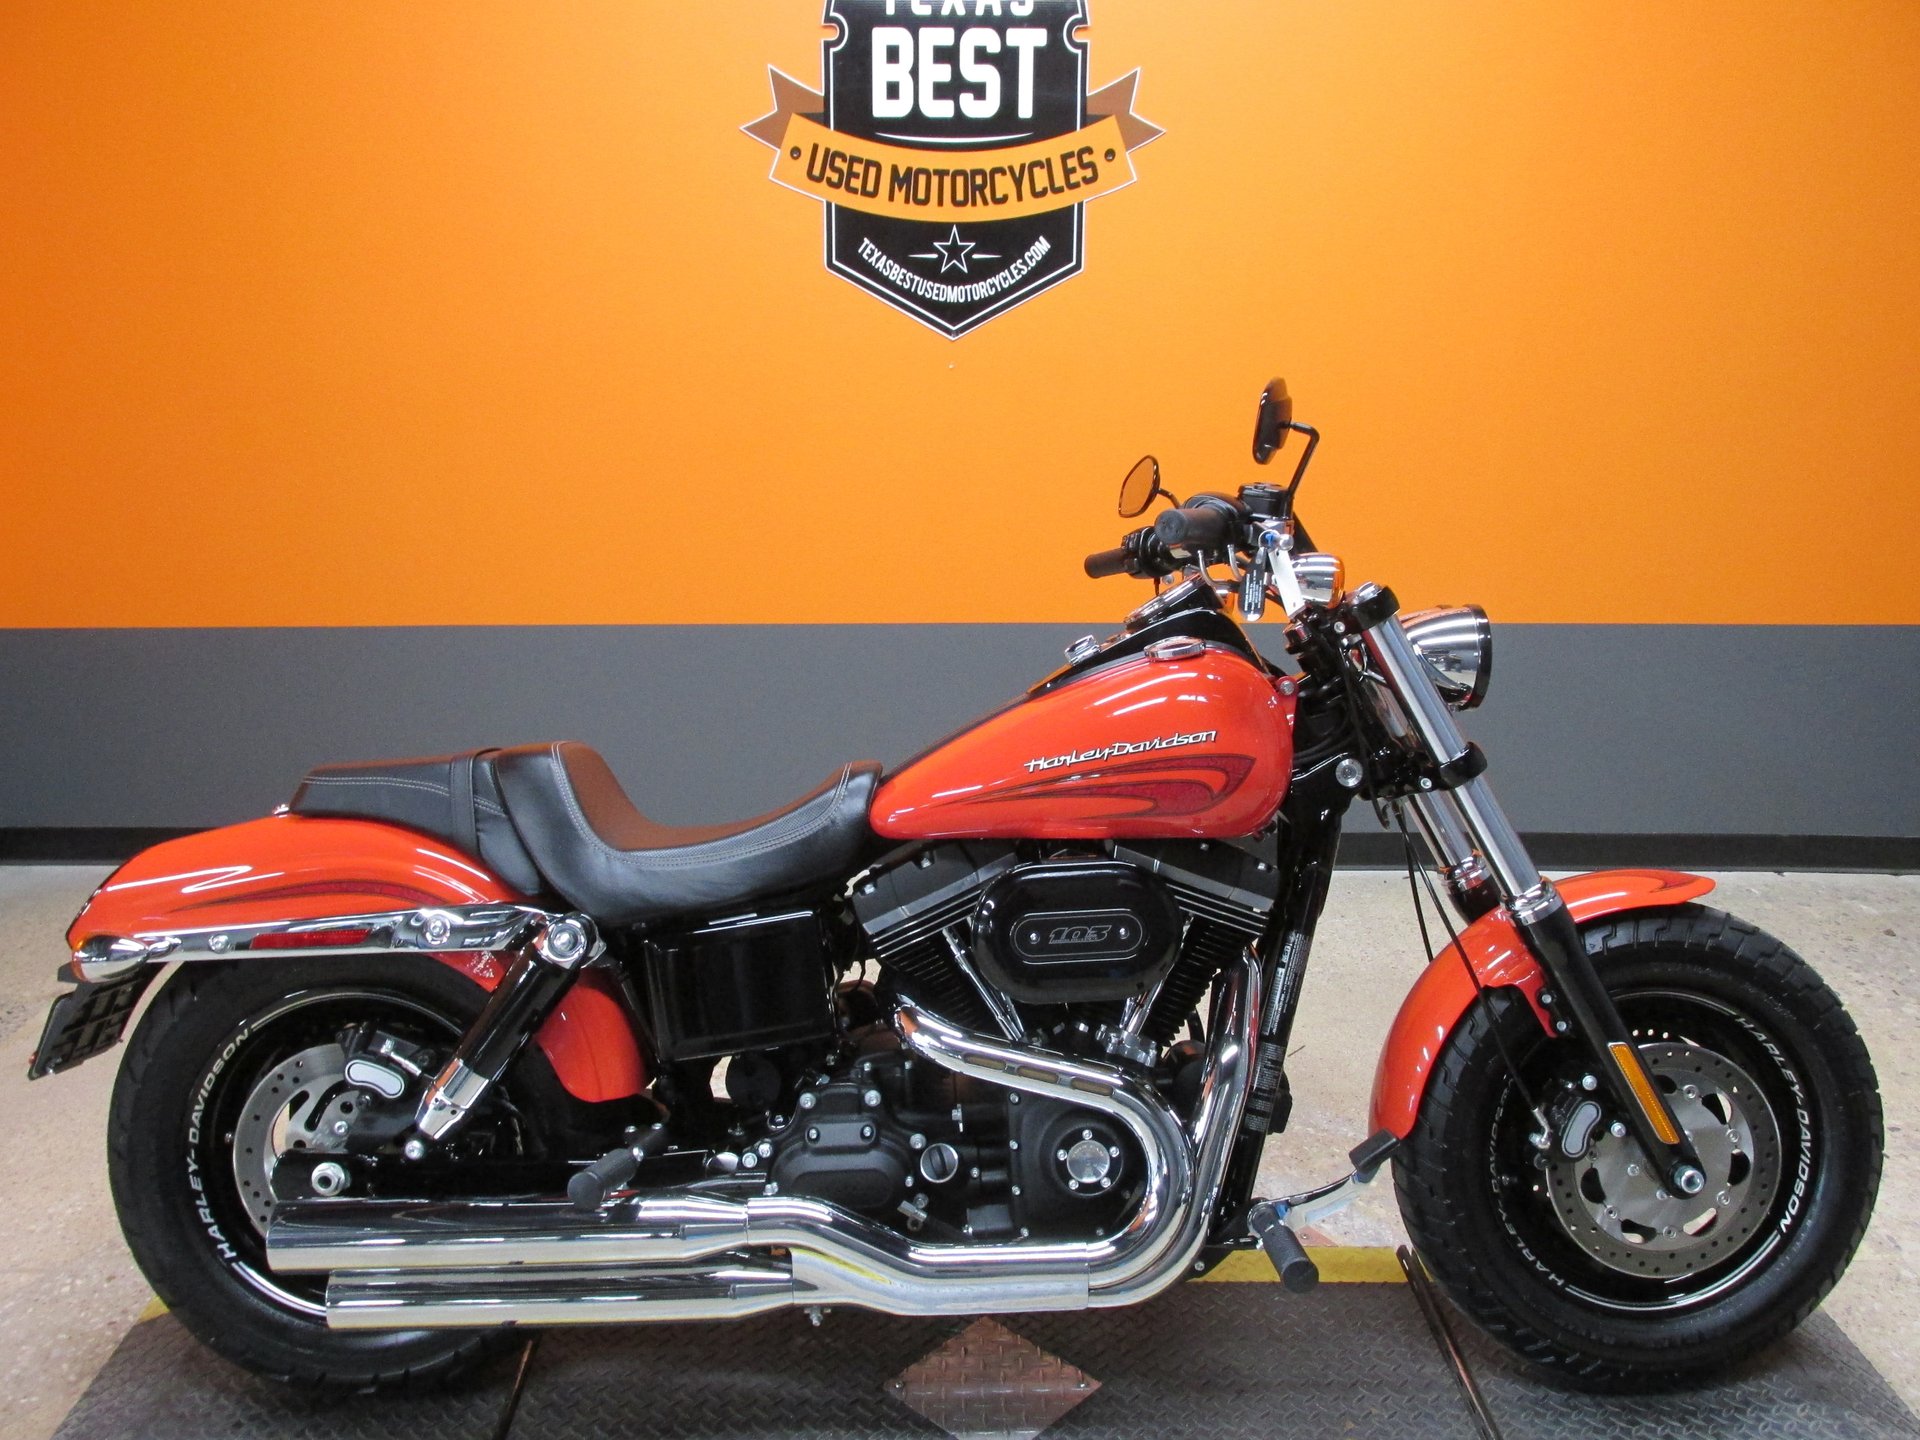 2017 Harley-Davidson Dyna Fat Bob | American Motorcycle Trading Company -  Used Harley Davidson Motorcycles